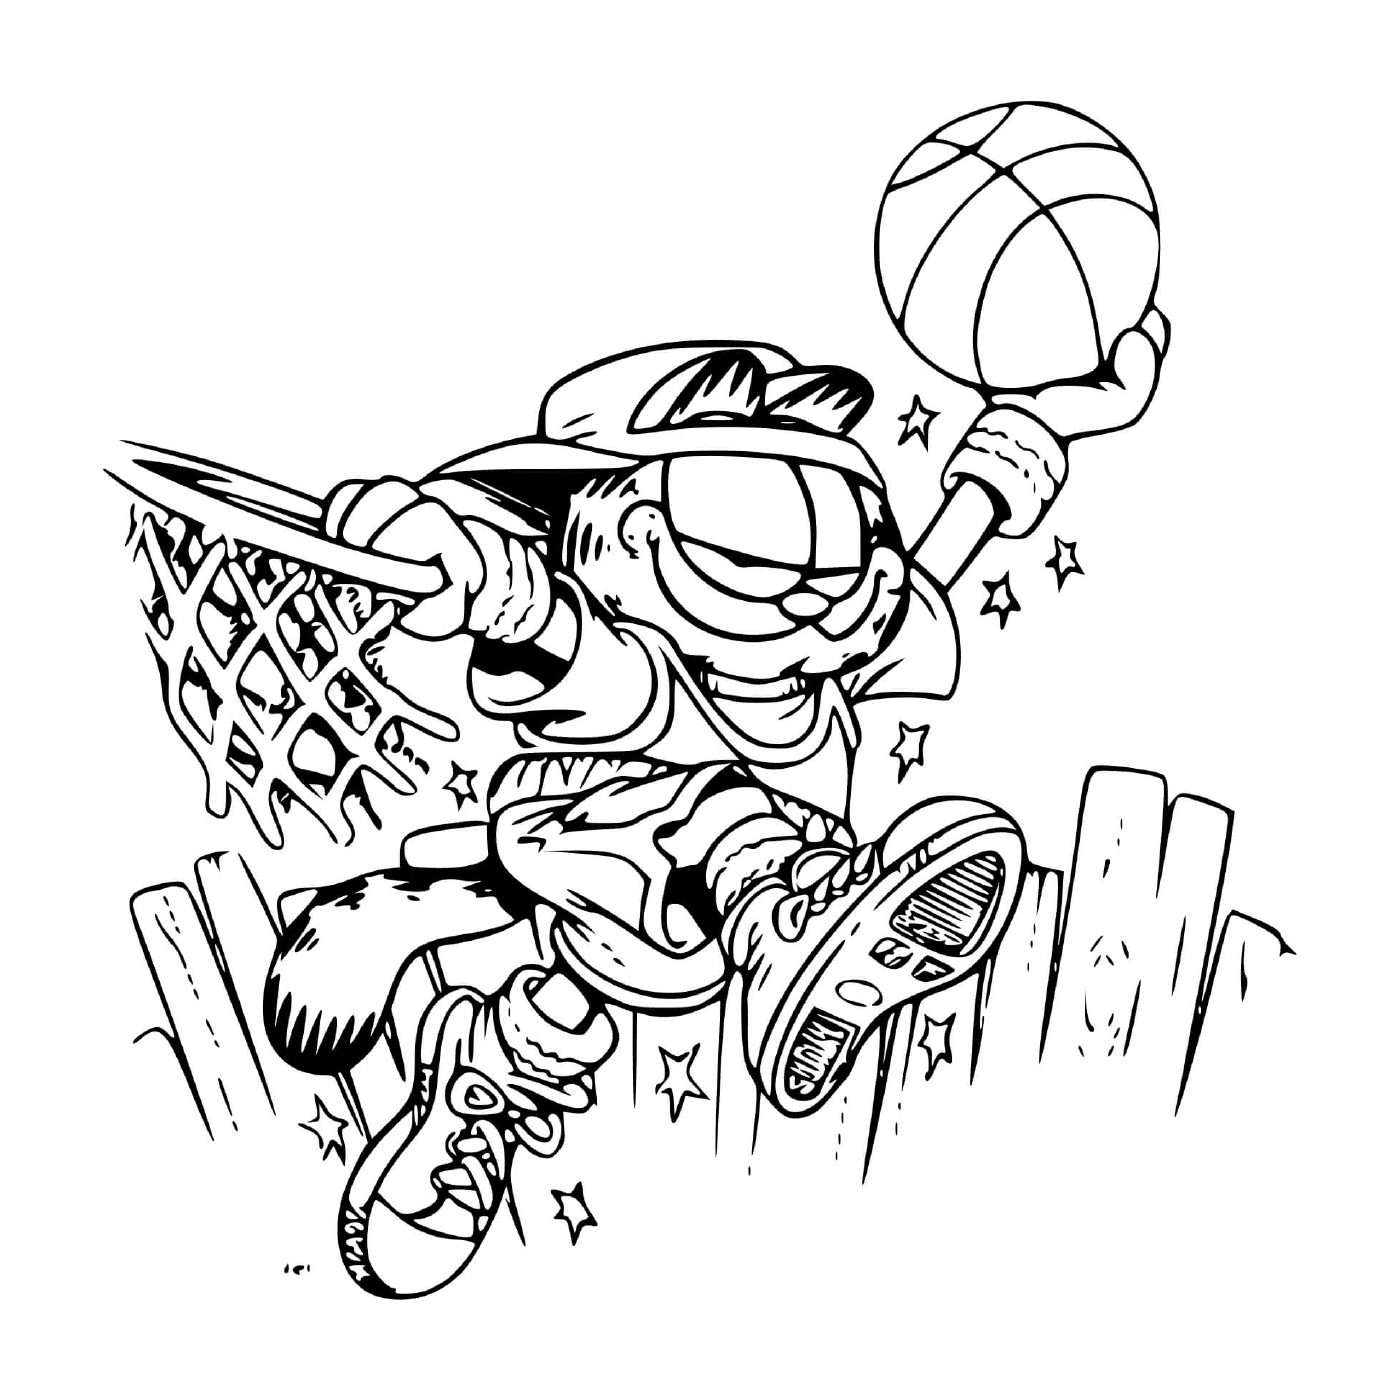  Garfield joga basquete 